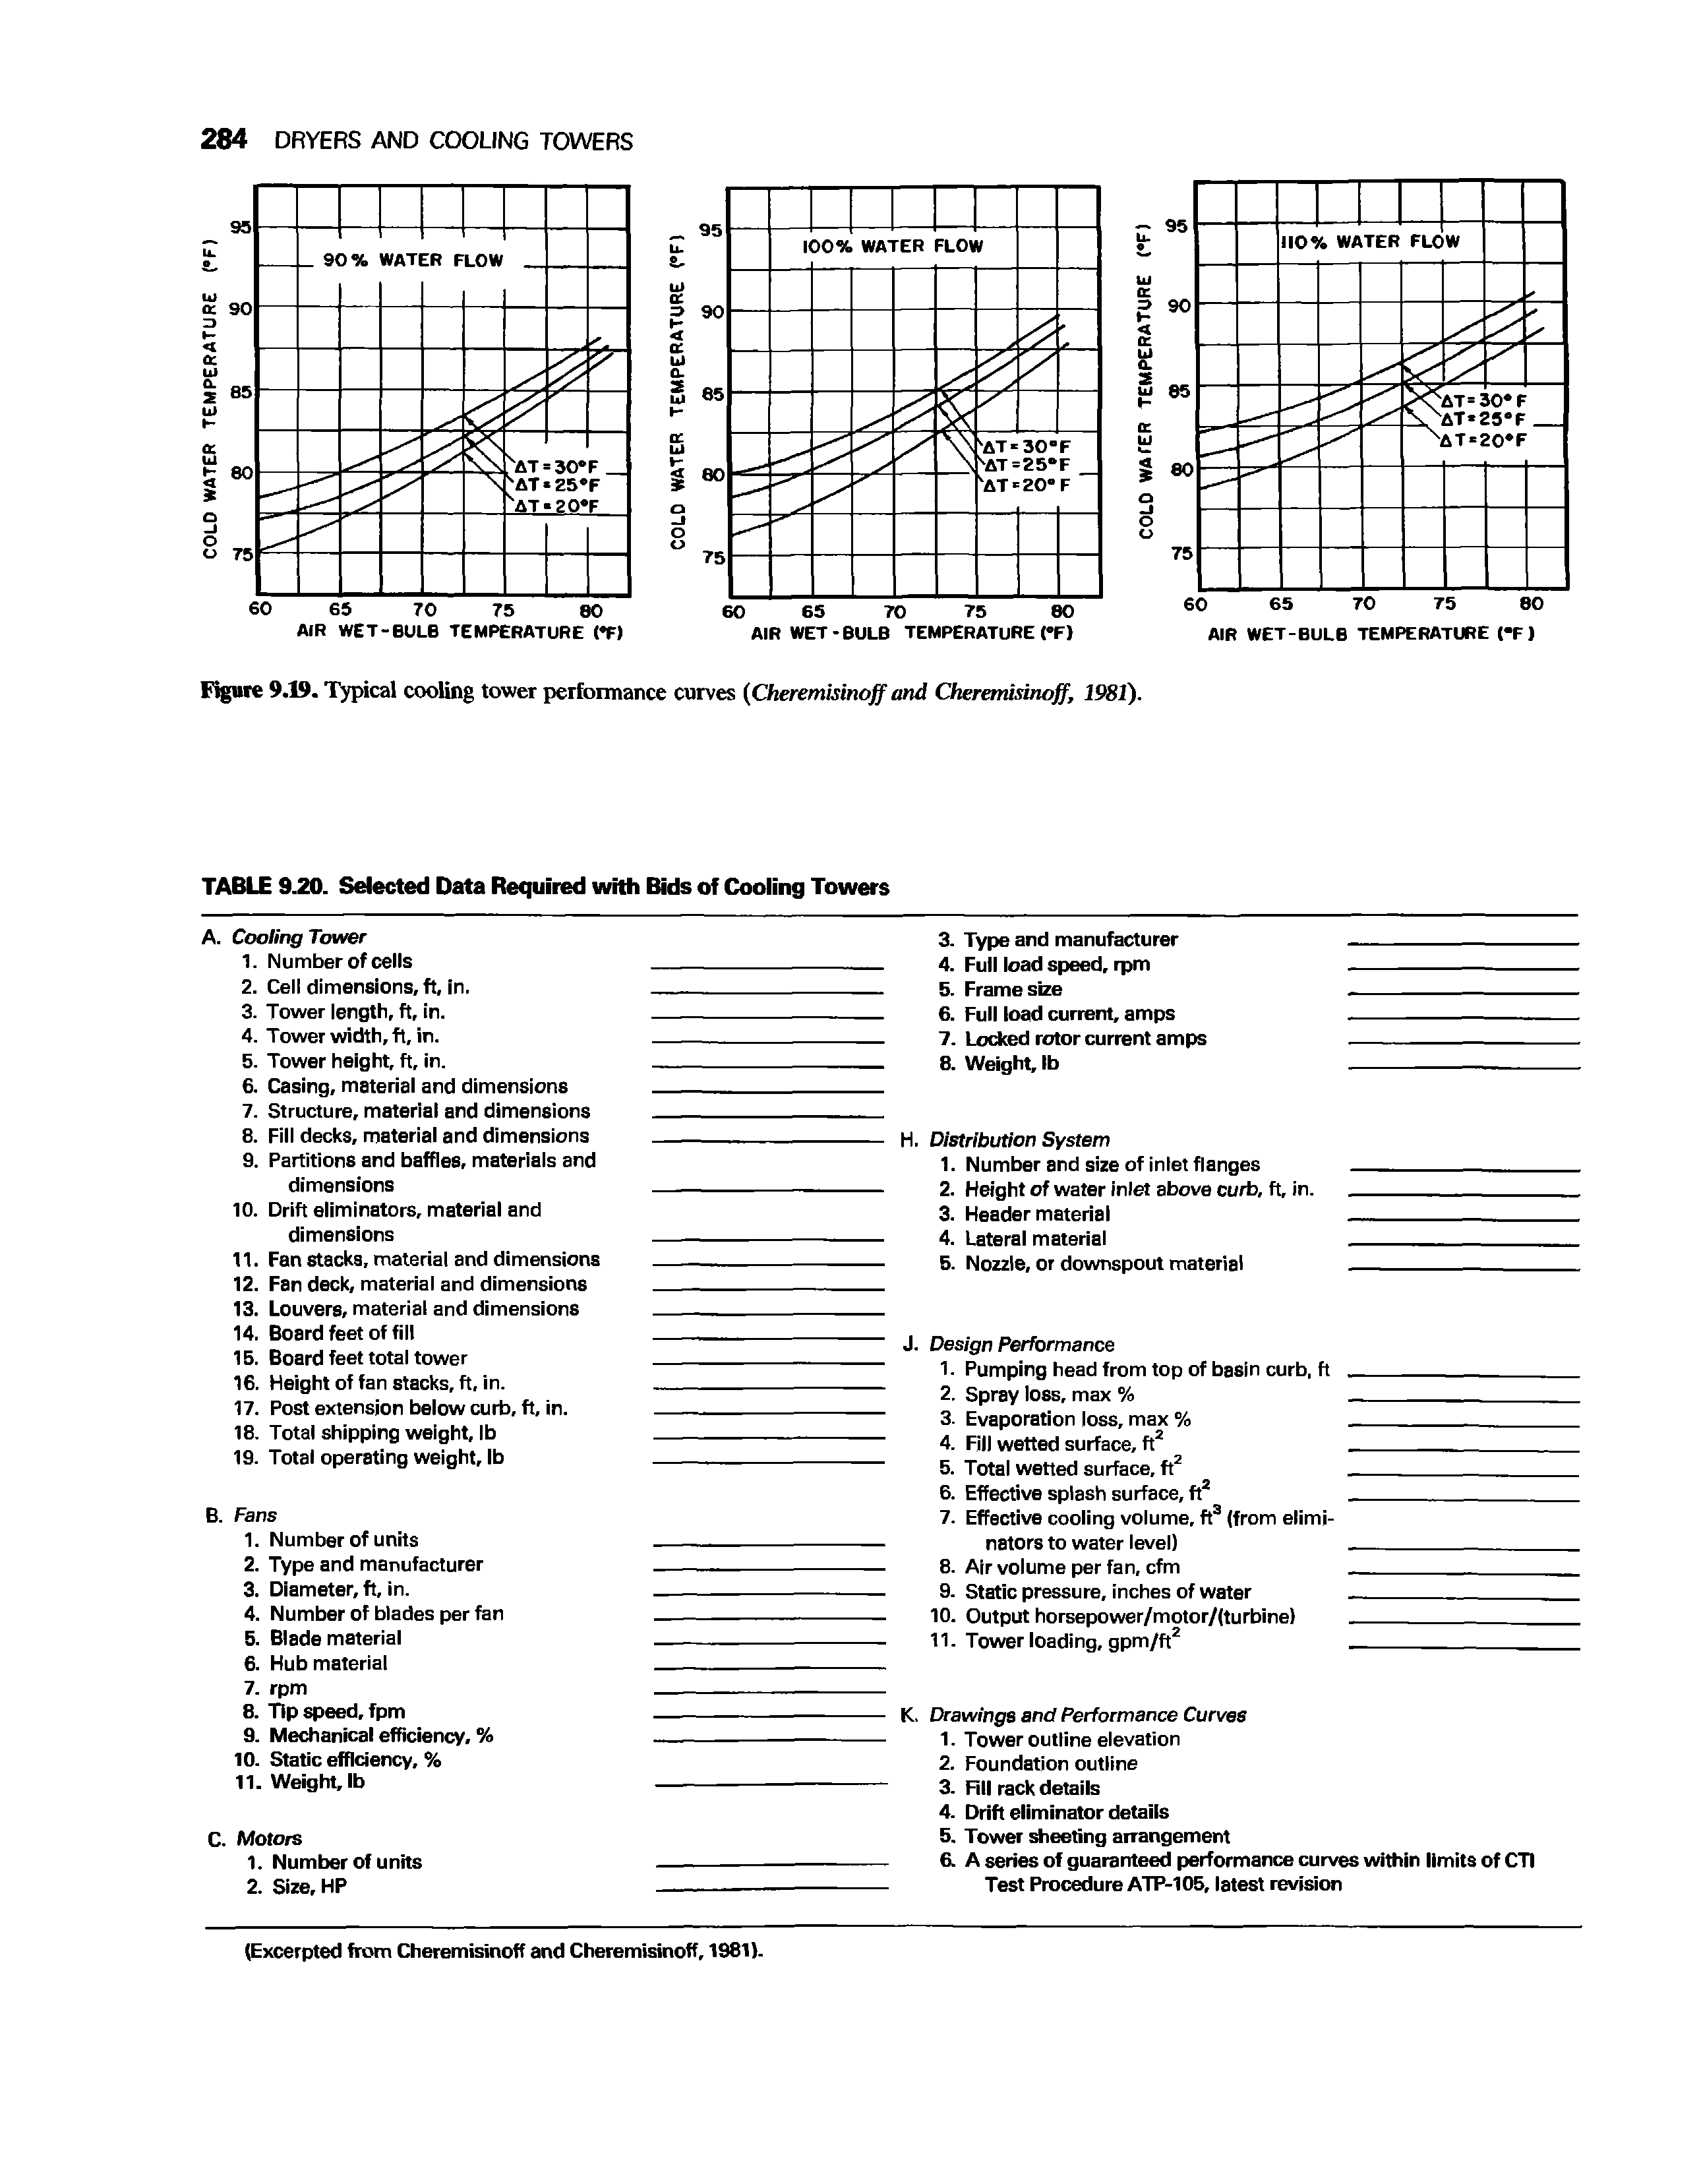 Figure 9.19. Typical cooling tower performance corves (Cheremisinoff and Cheremisinoff, 1981).